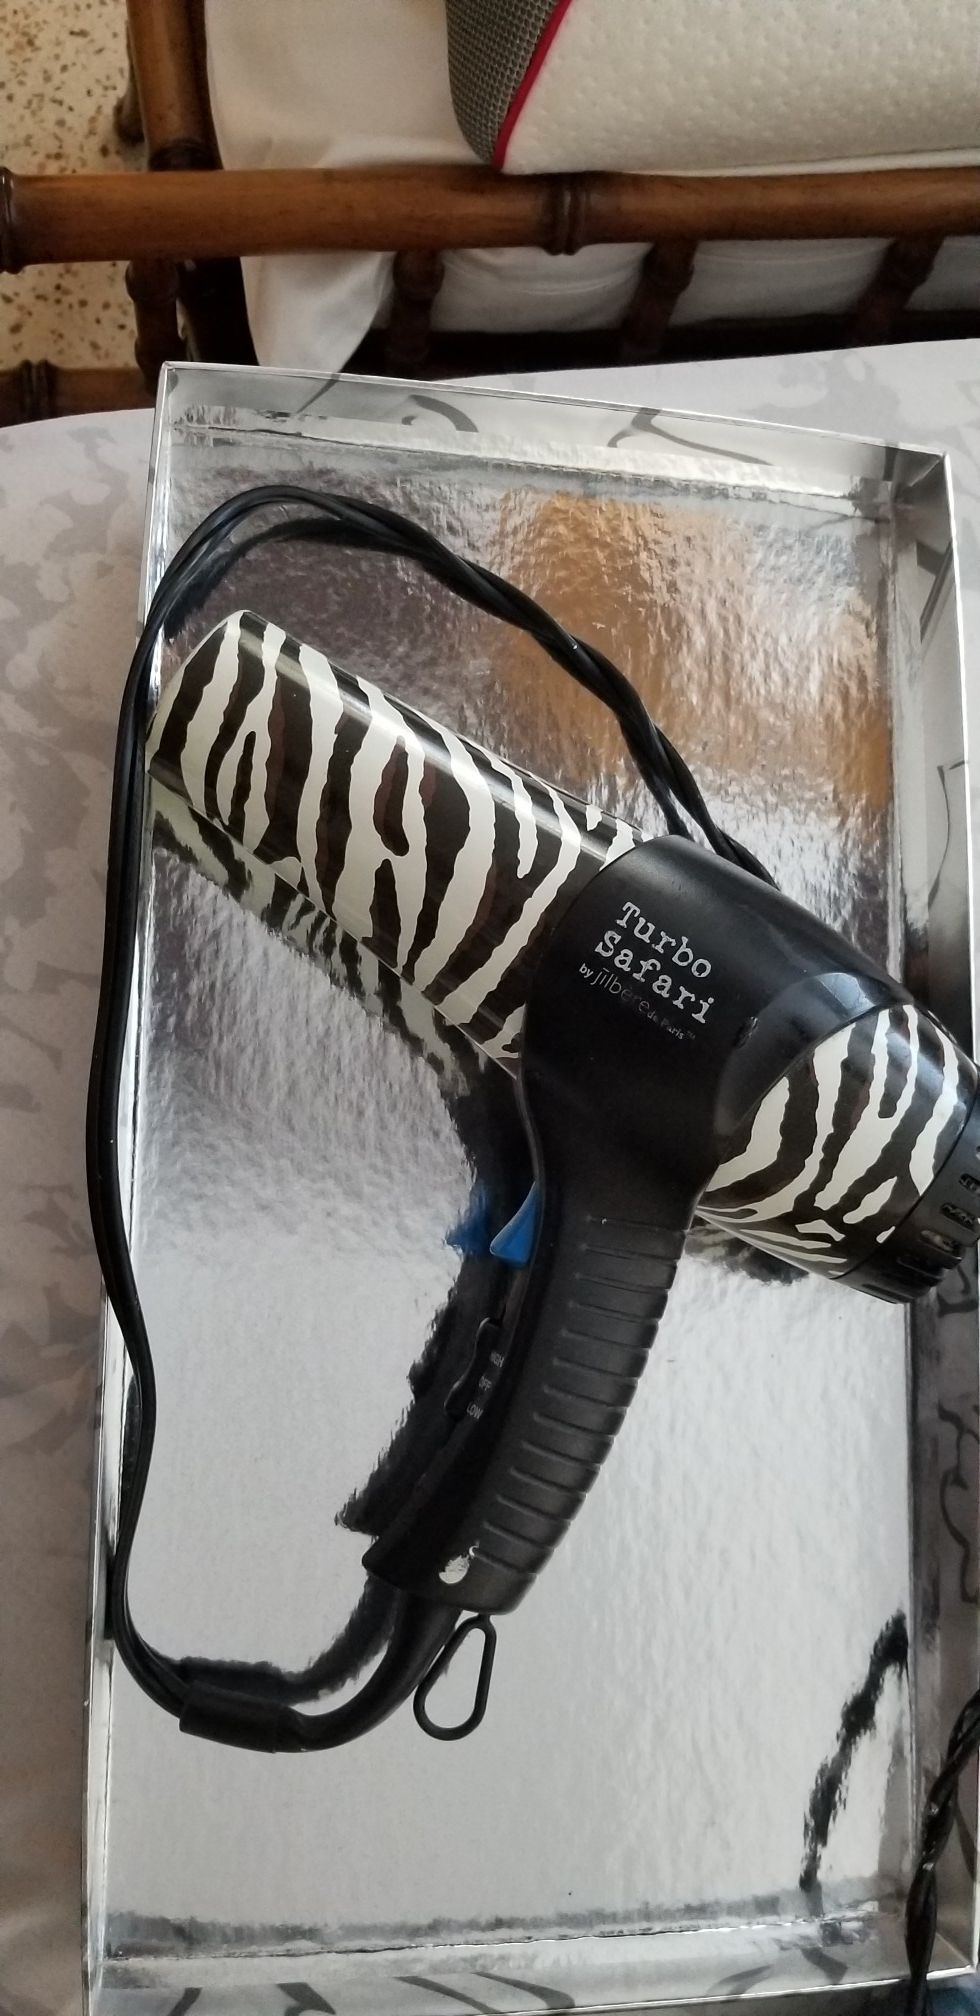 Turbo hair dryer